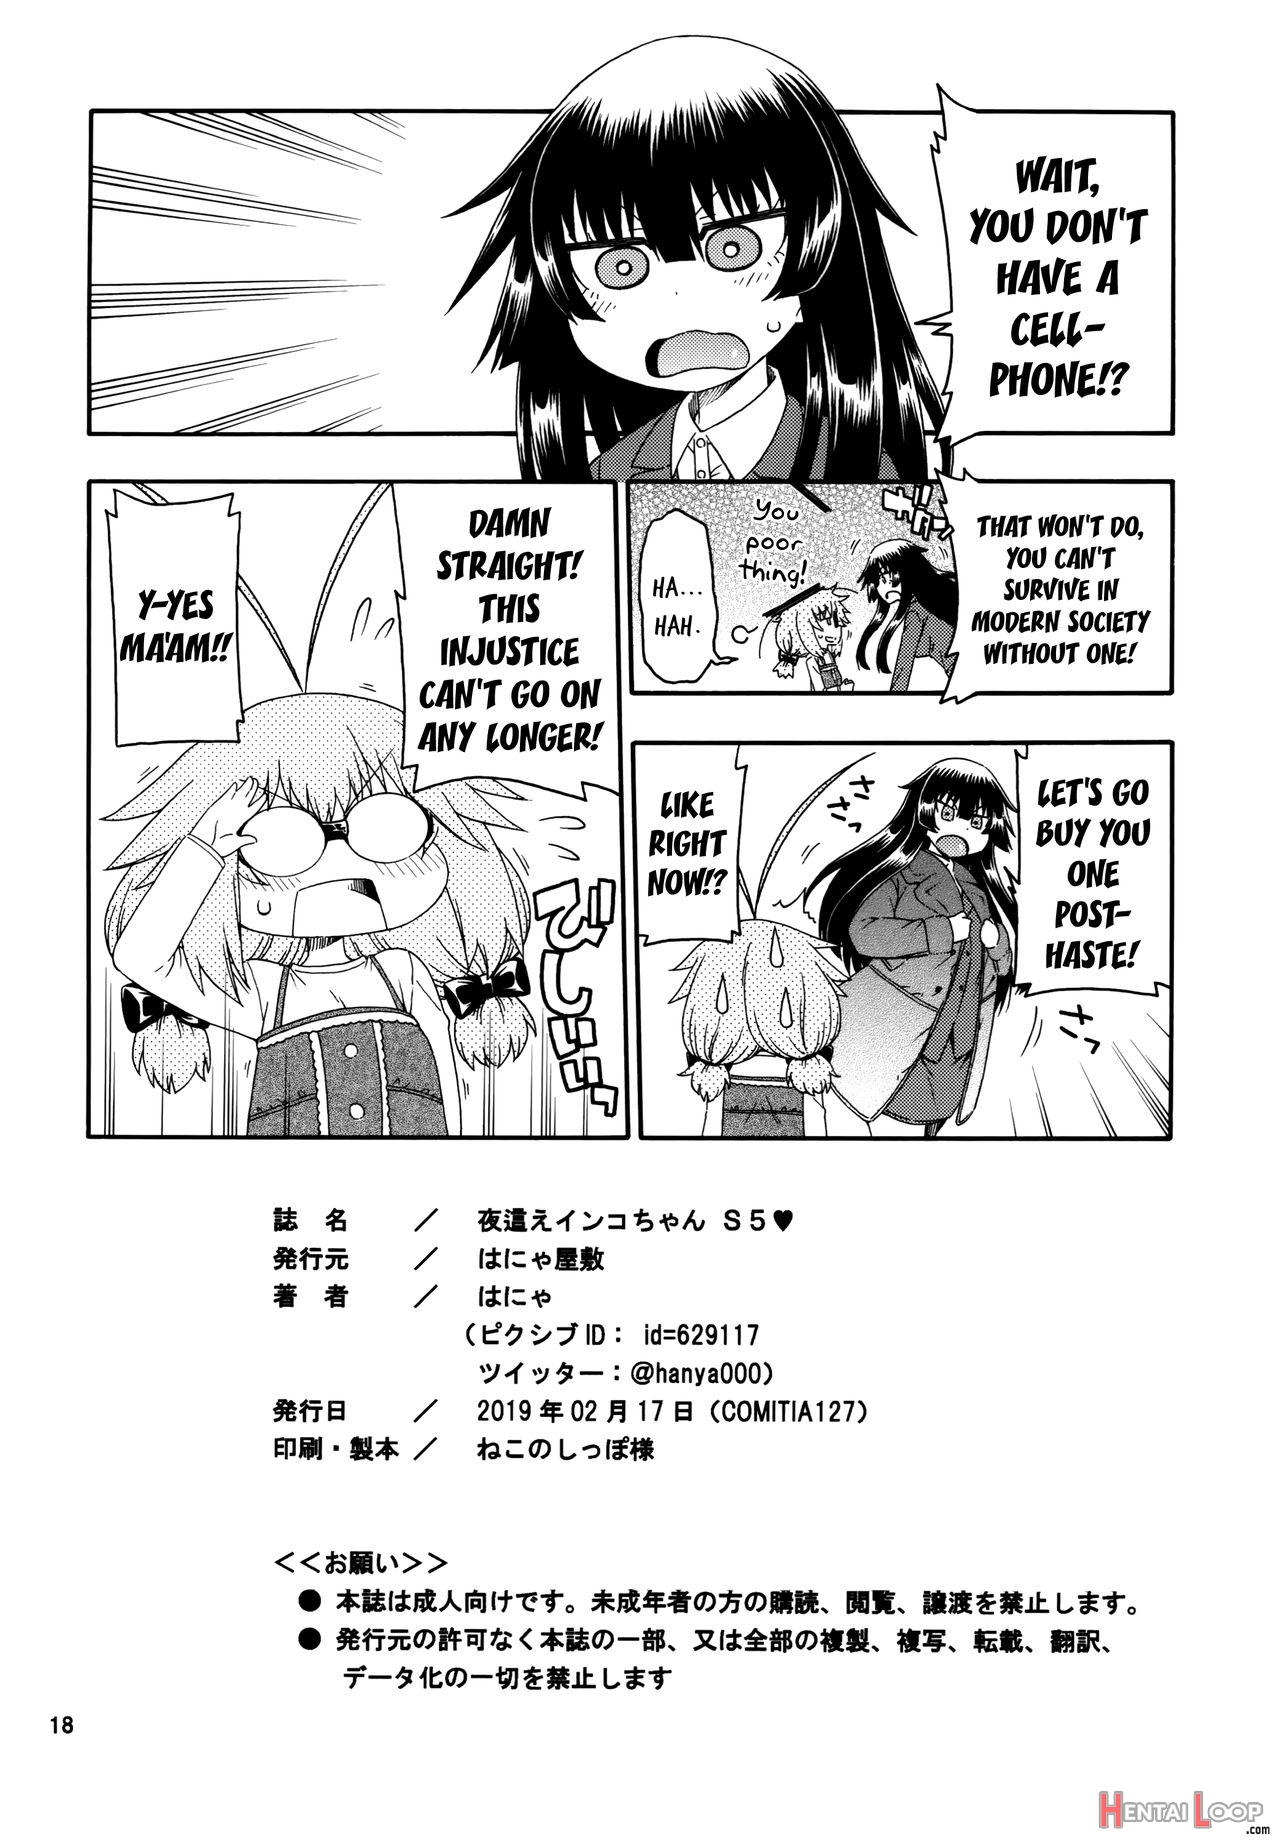 Nightcrawler Inko-chan S5 page 18